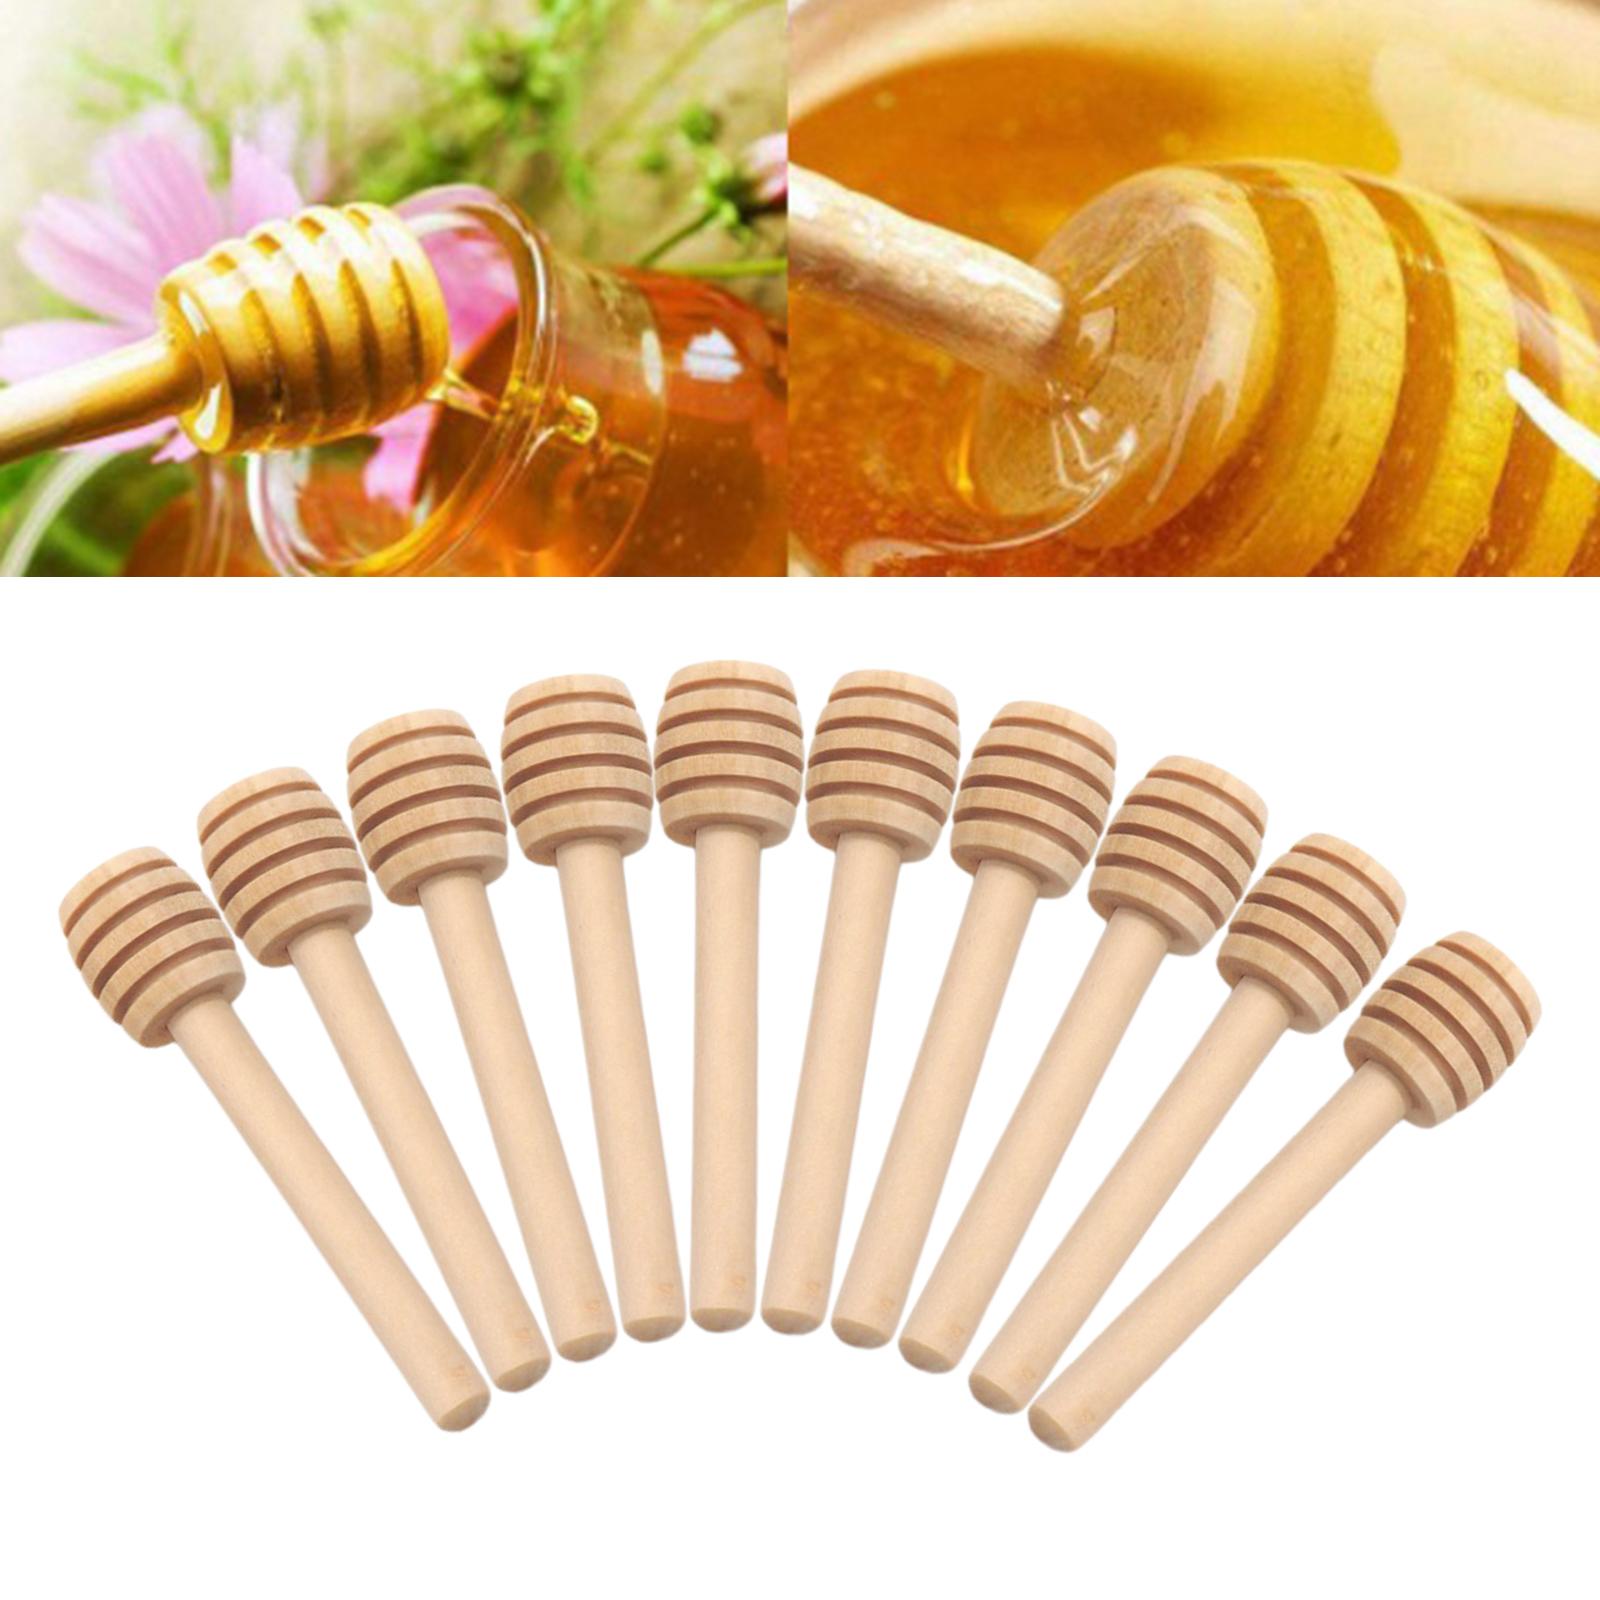 10pcs Honey Dipper Stick, 3 Inch 4 Inch Mini Wood Honey Stirrer Wand for Honey Jar Dispense Drizzle Honey, Wedding Party Favors